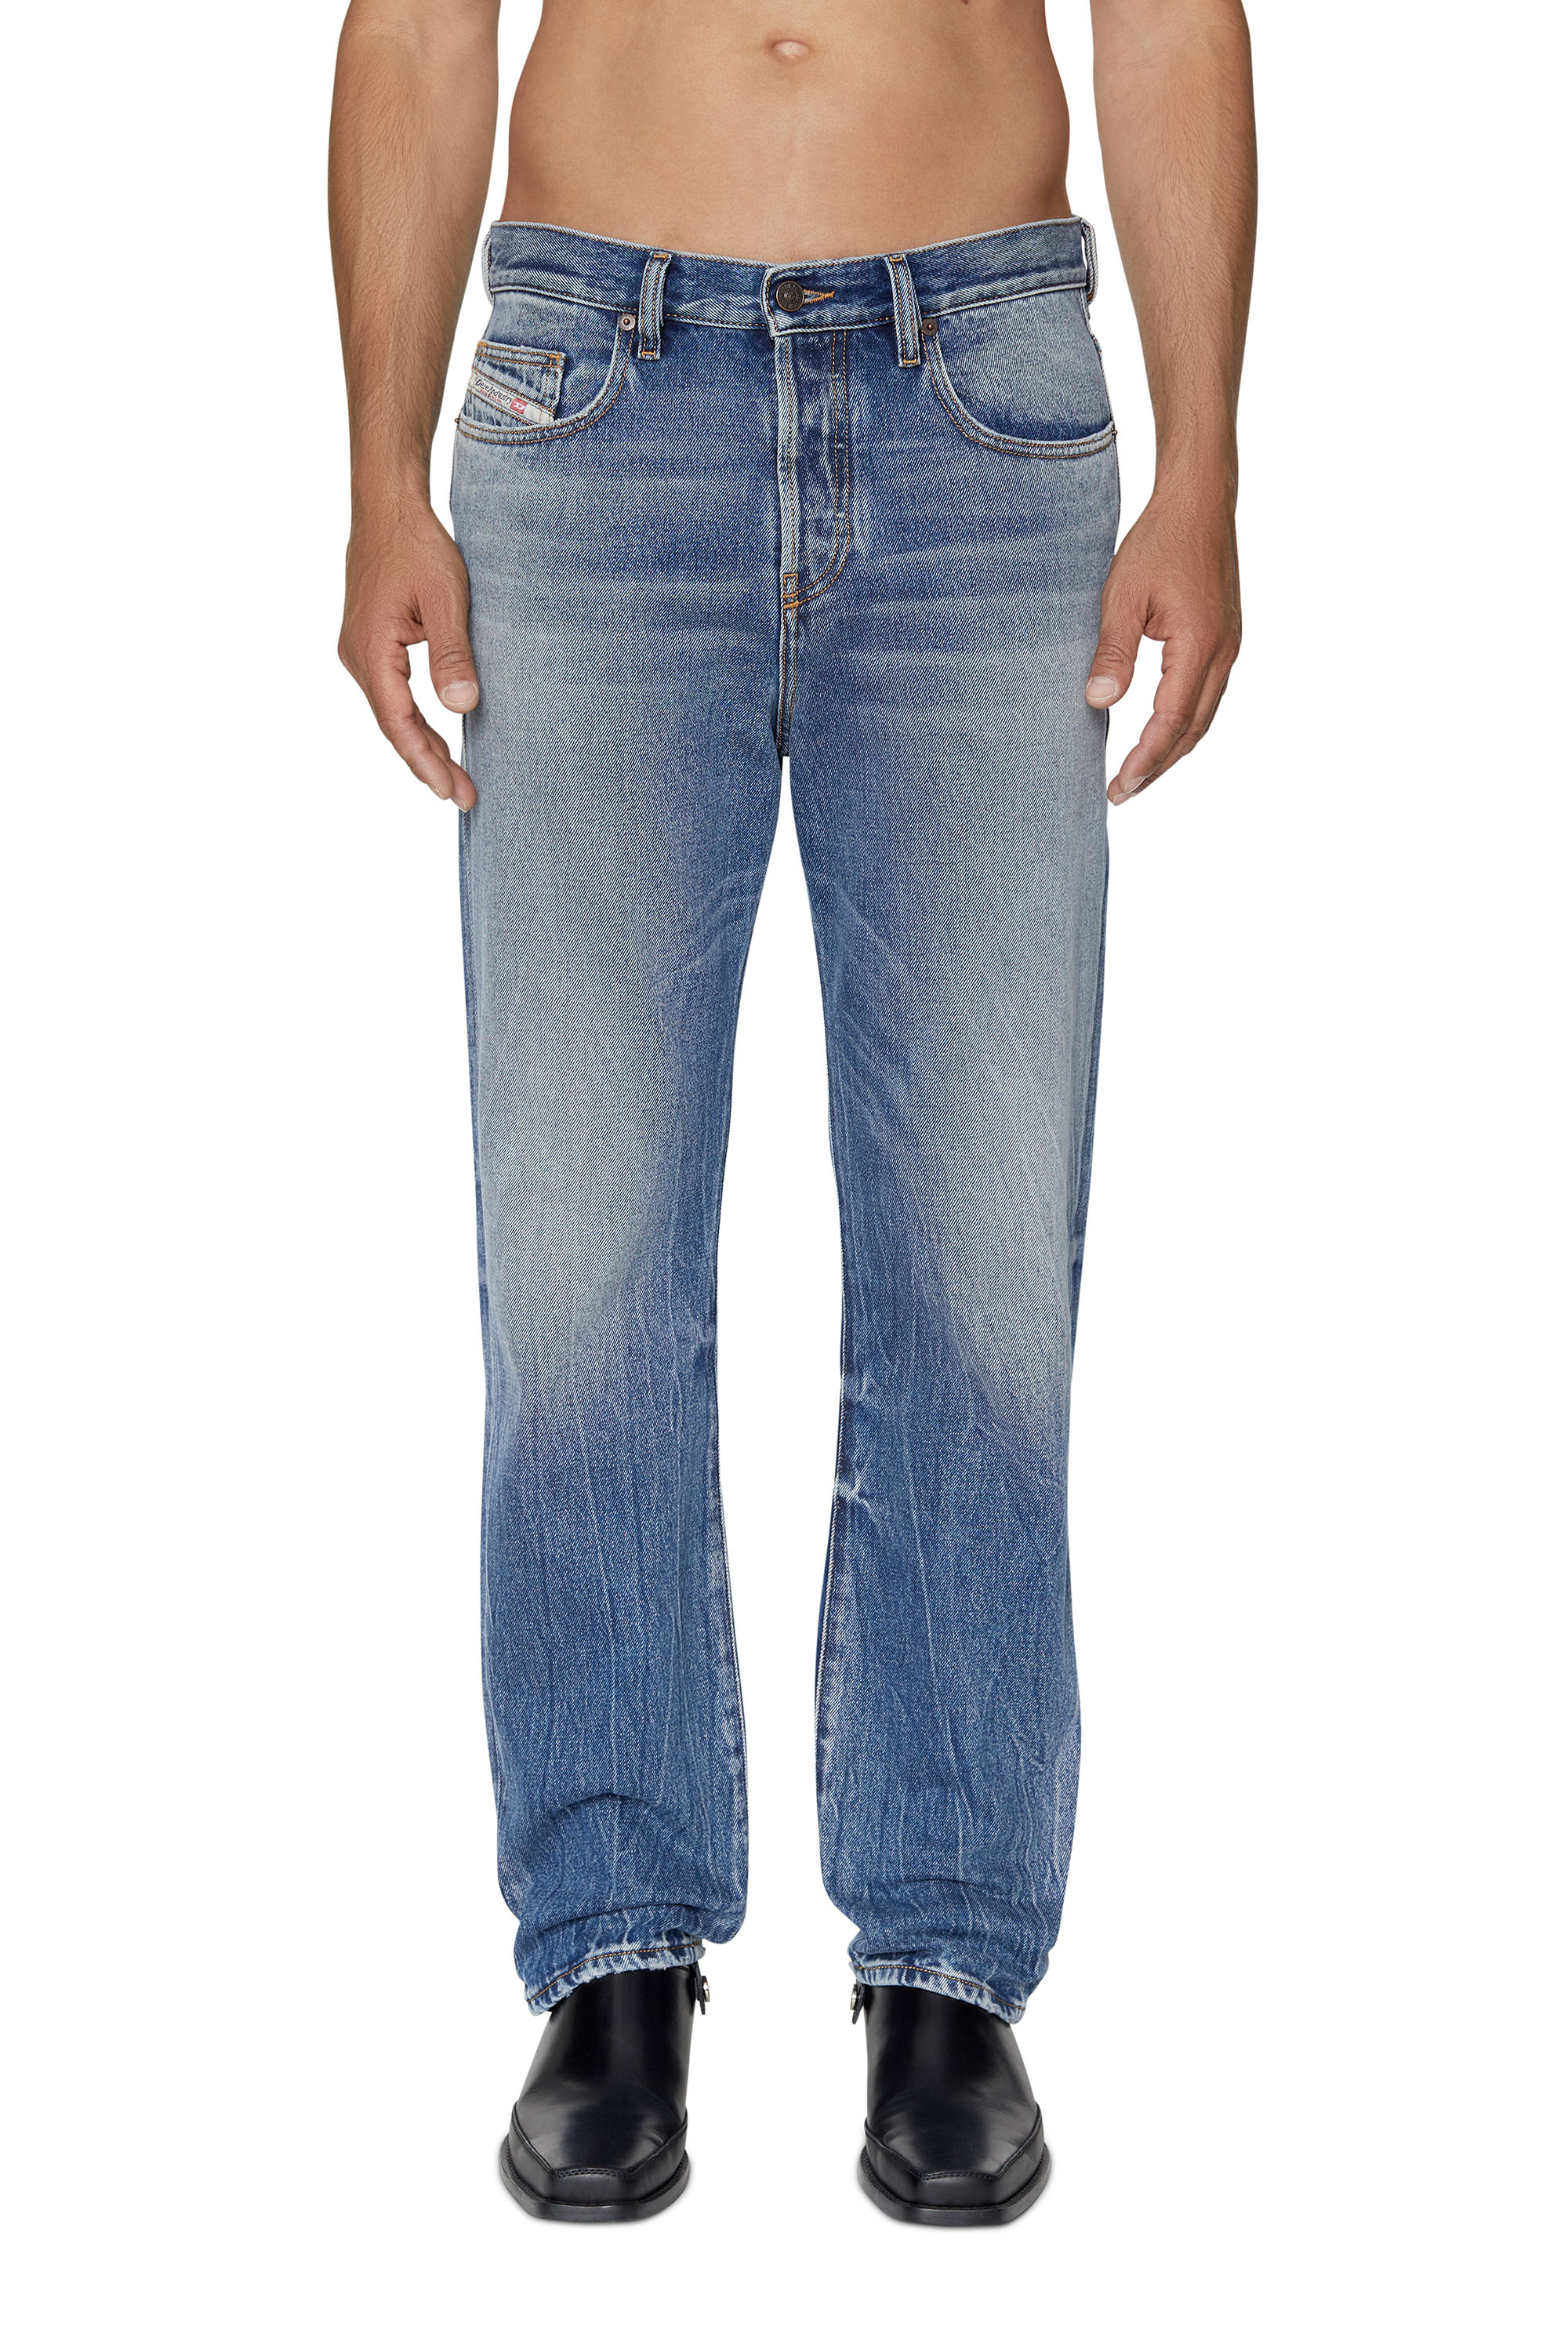 2020 D-VIKER 09D55 Straight Jeans, Medium blue - Jeans